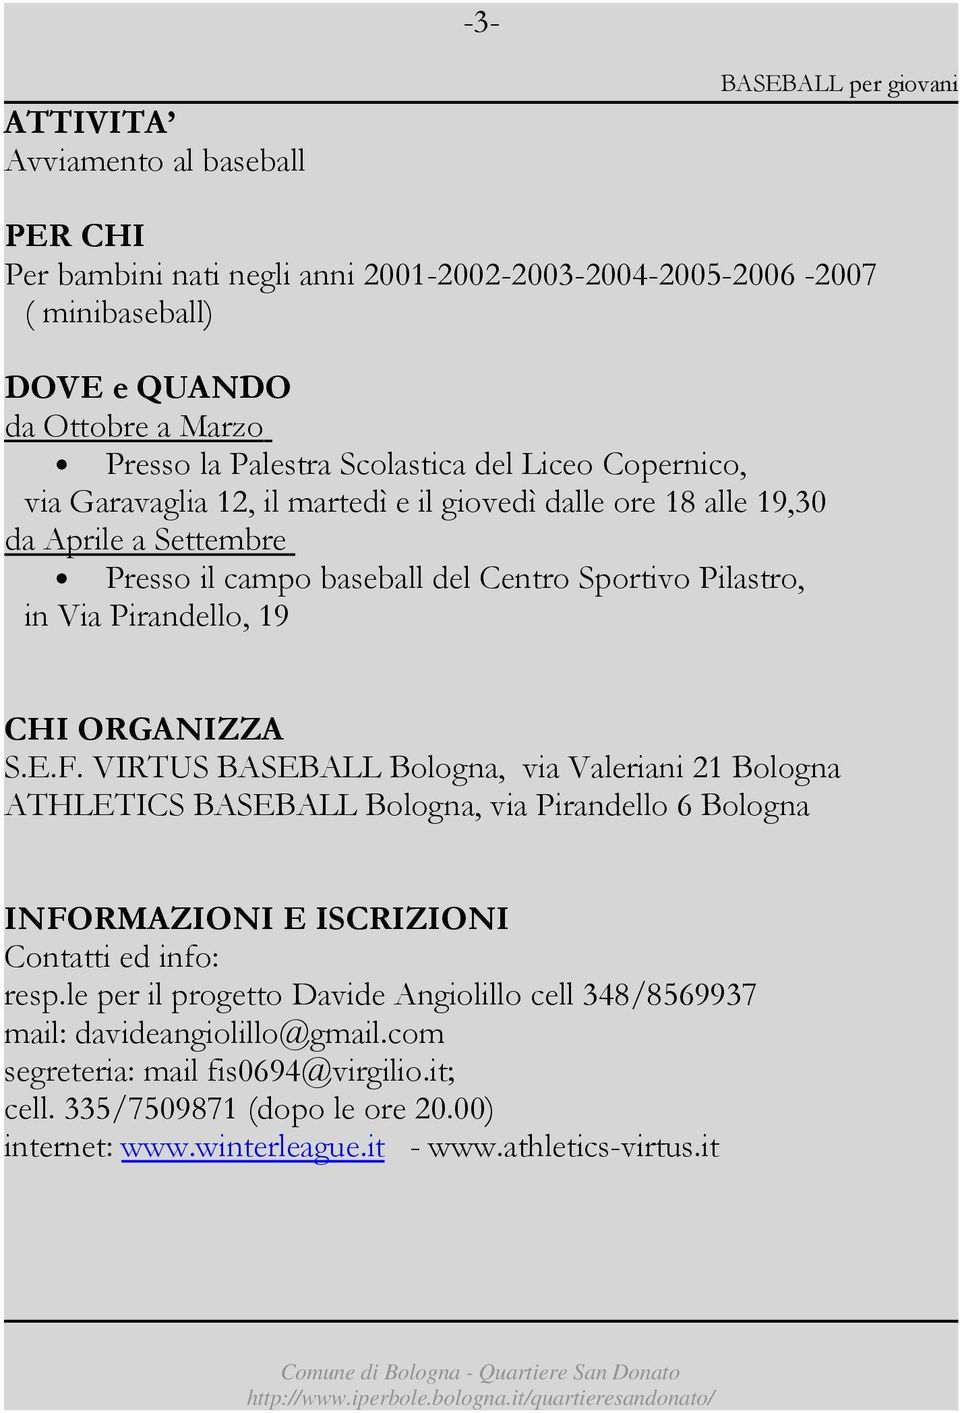 Pirandello, 19 S.E.F. VIRTUS BASEBALL Bologna, via Valeriani 21 Bologna ATHLETICS BASEBALL Bologna, via Pirandello 6 Bologna Contatti ed info: resp.